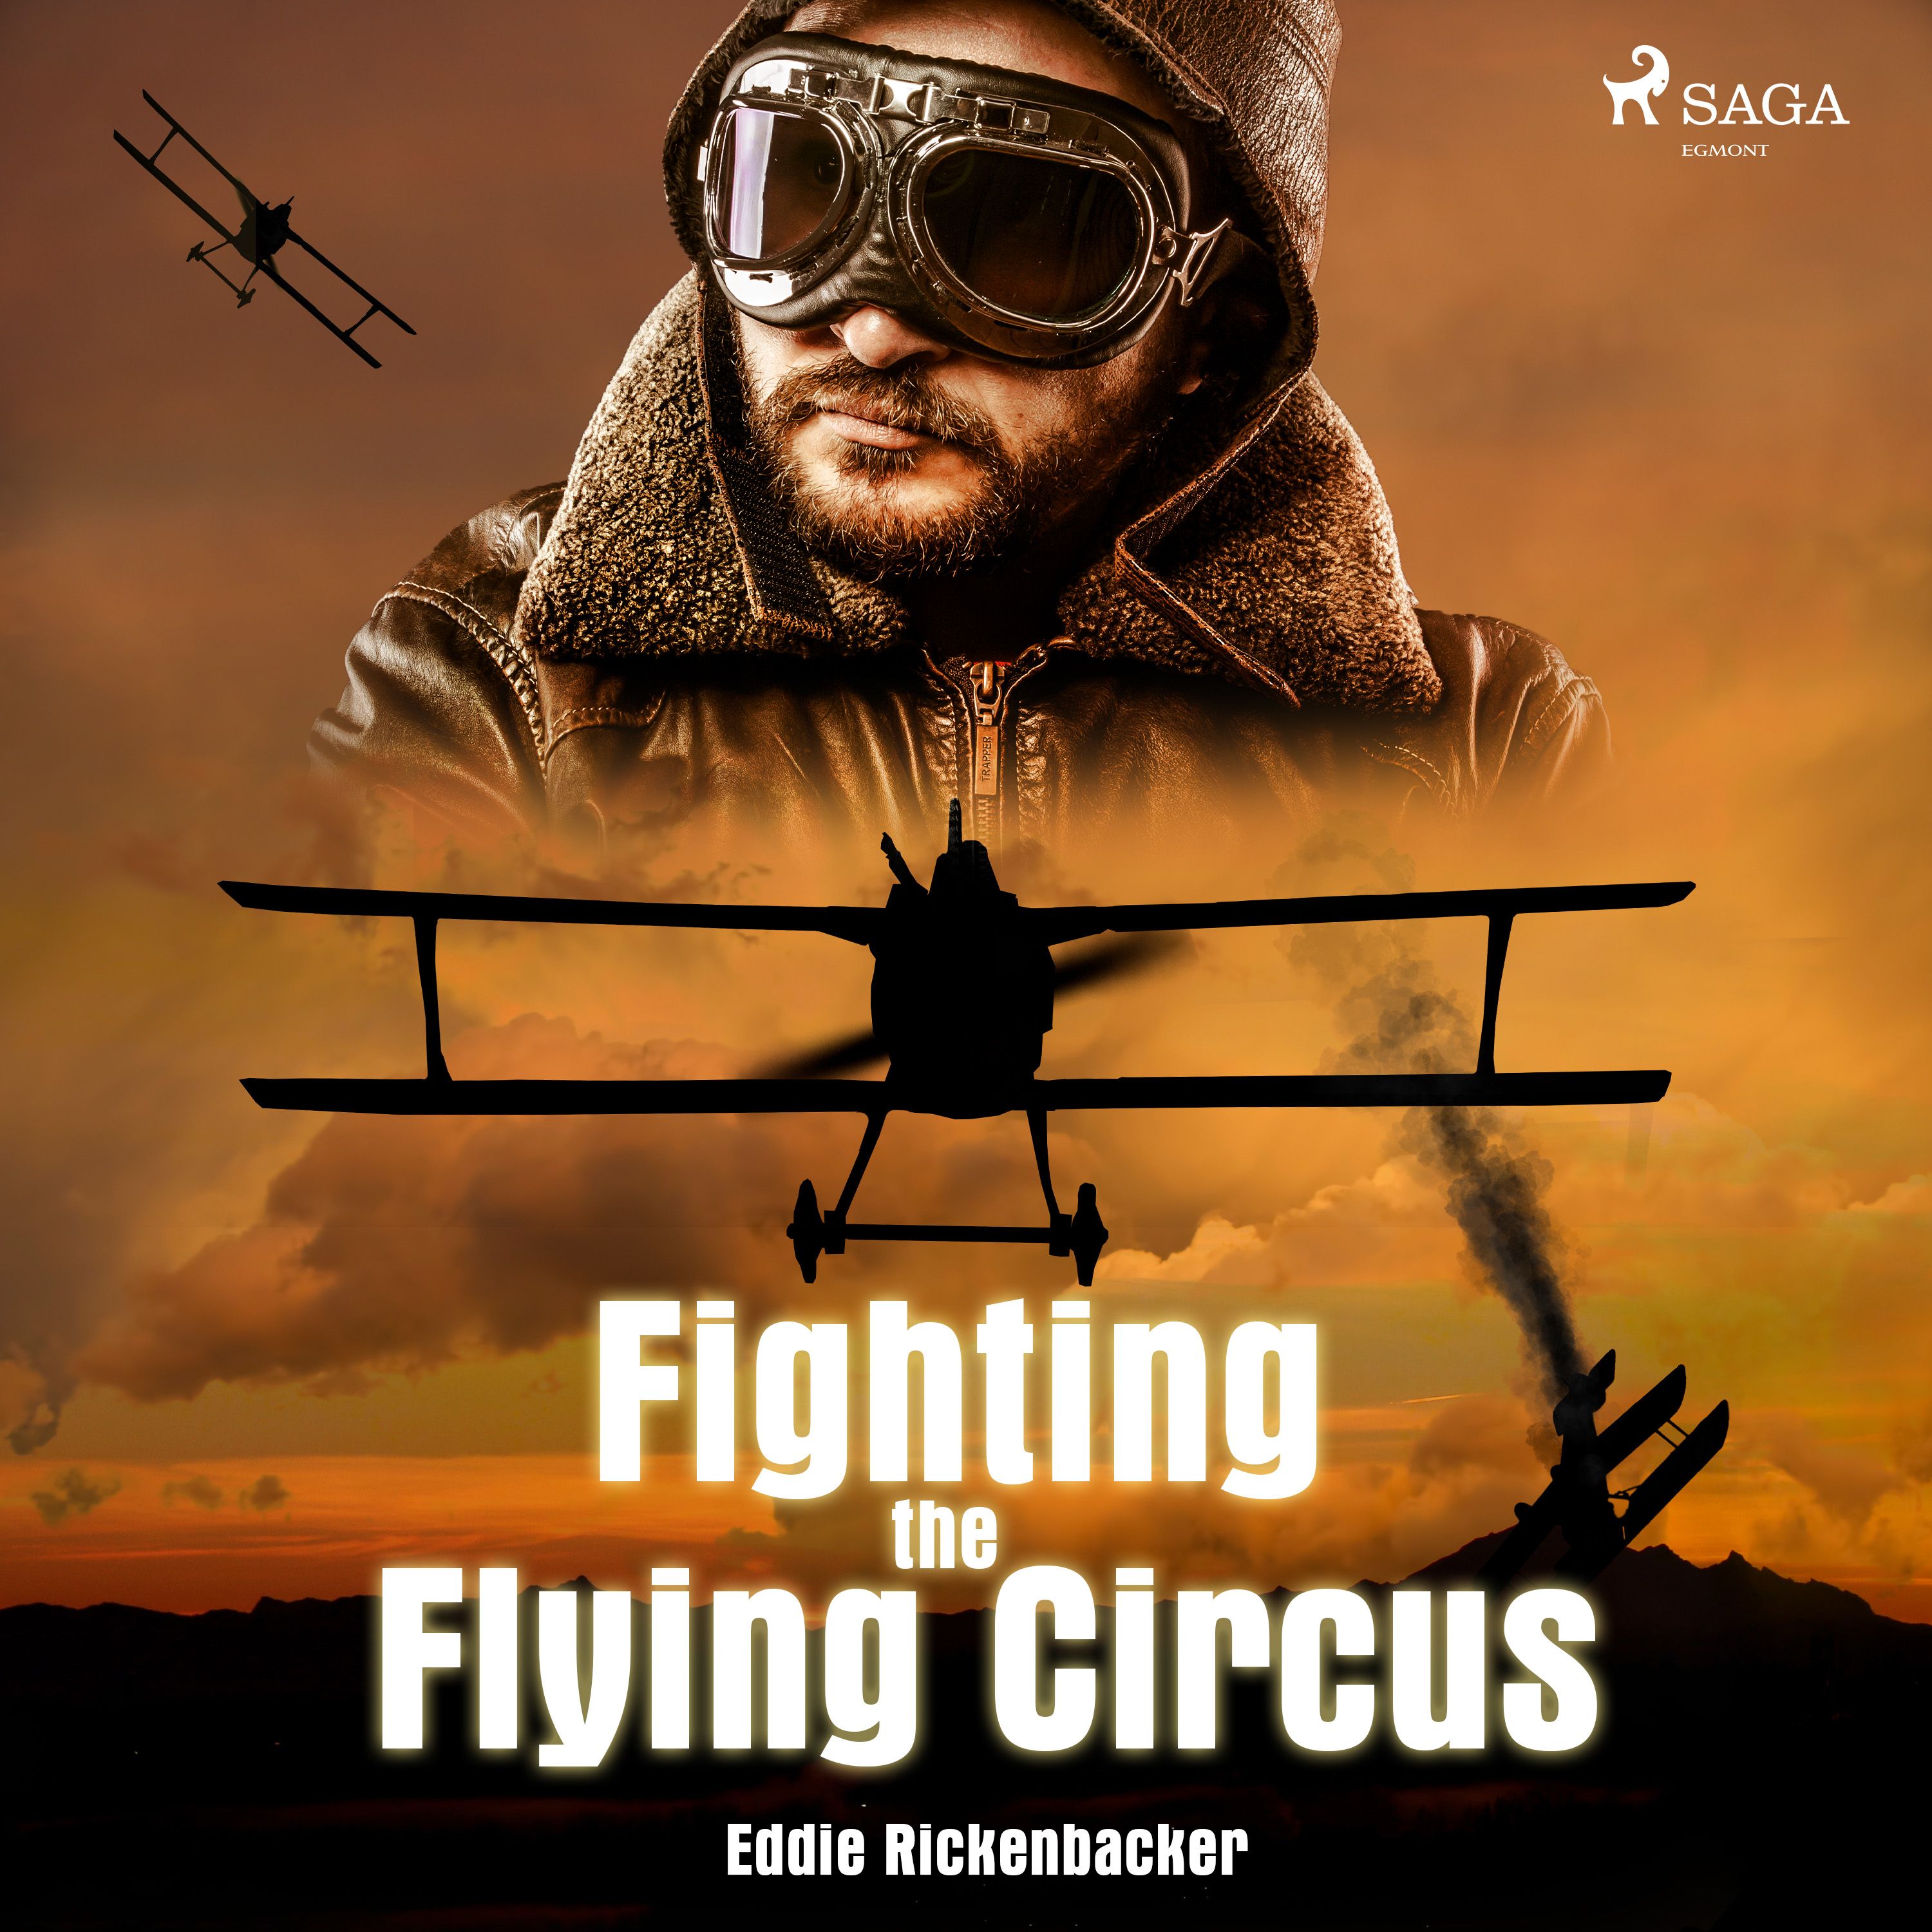 Fighting the Flying Circus, ljudbok av Eddie Rickenbacker